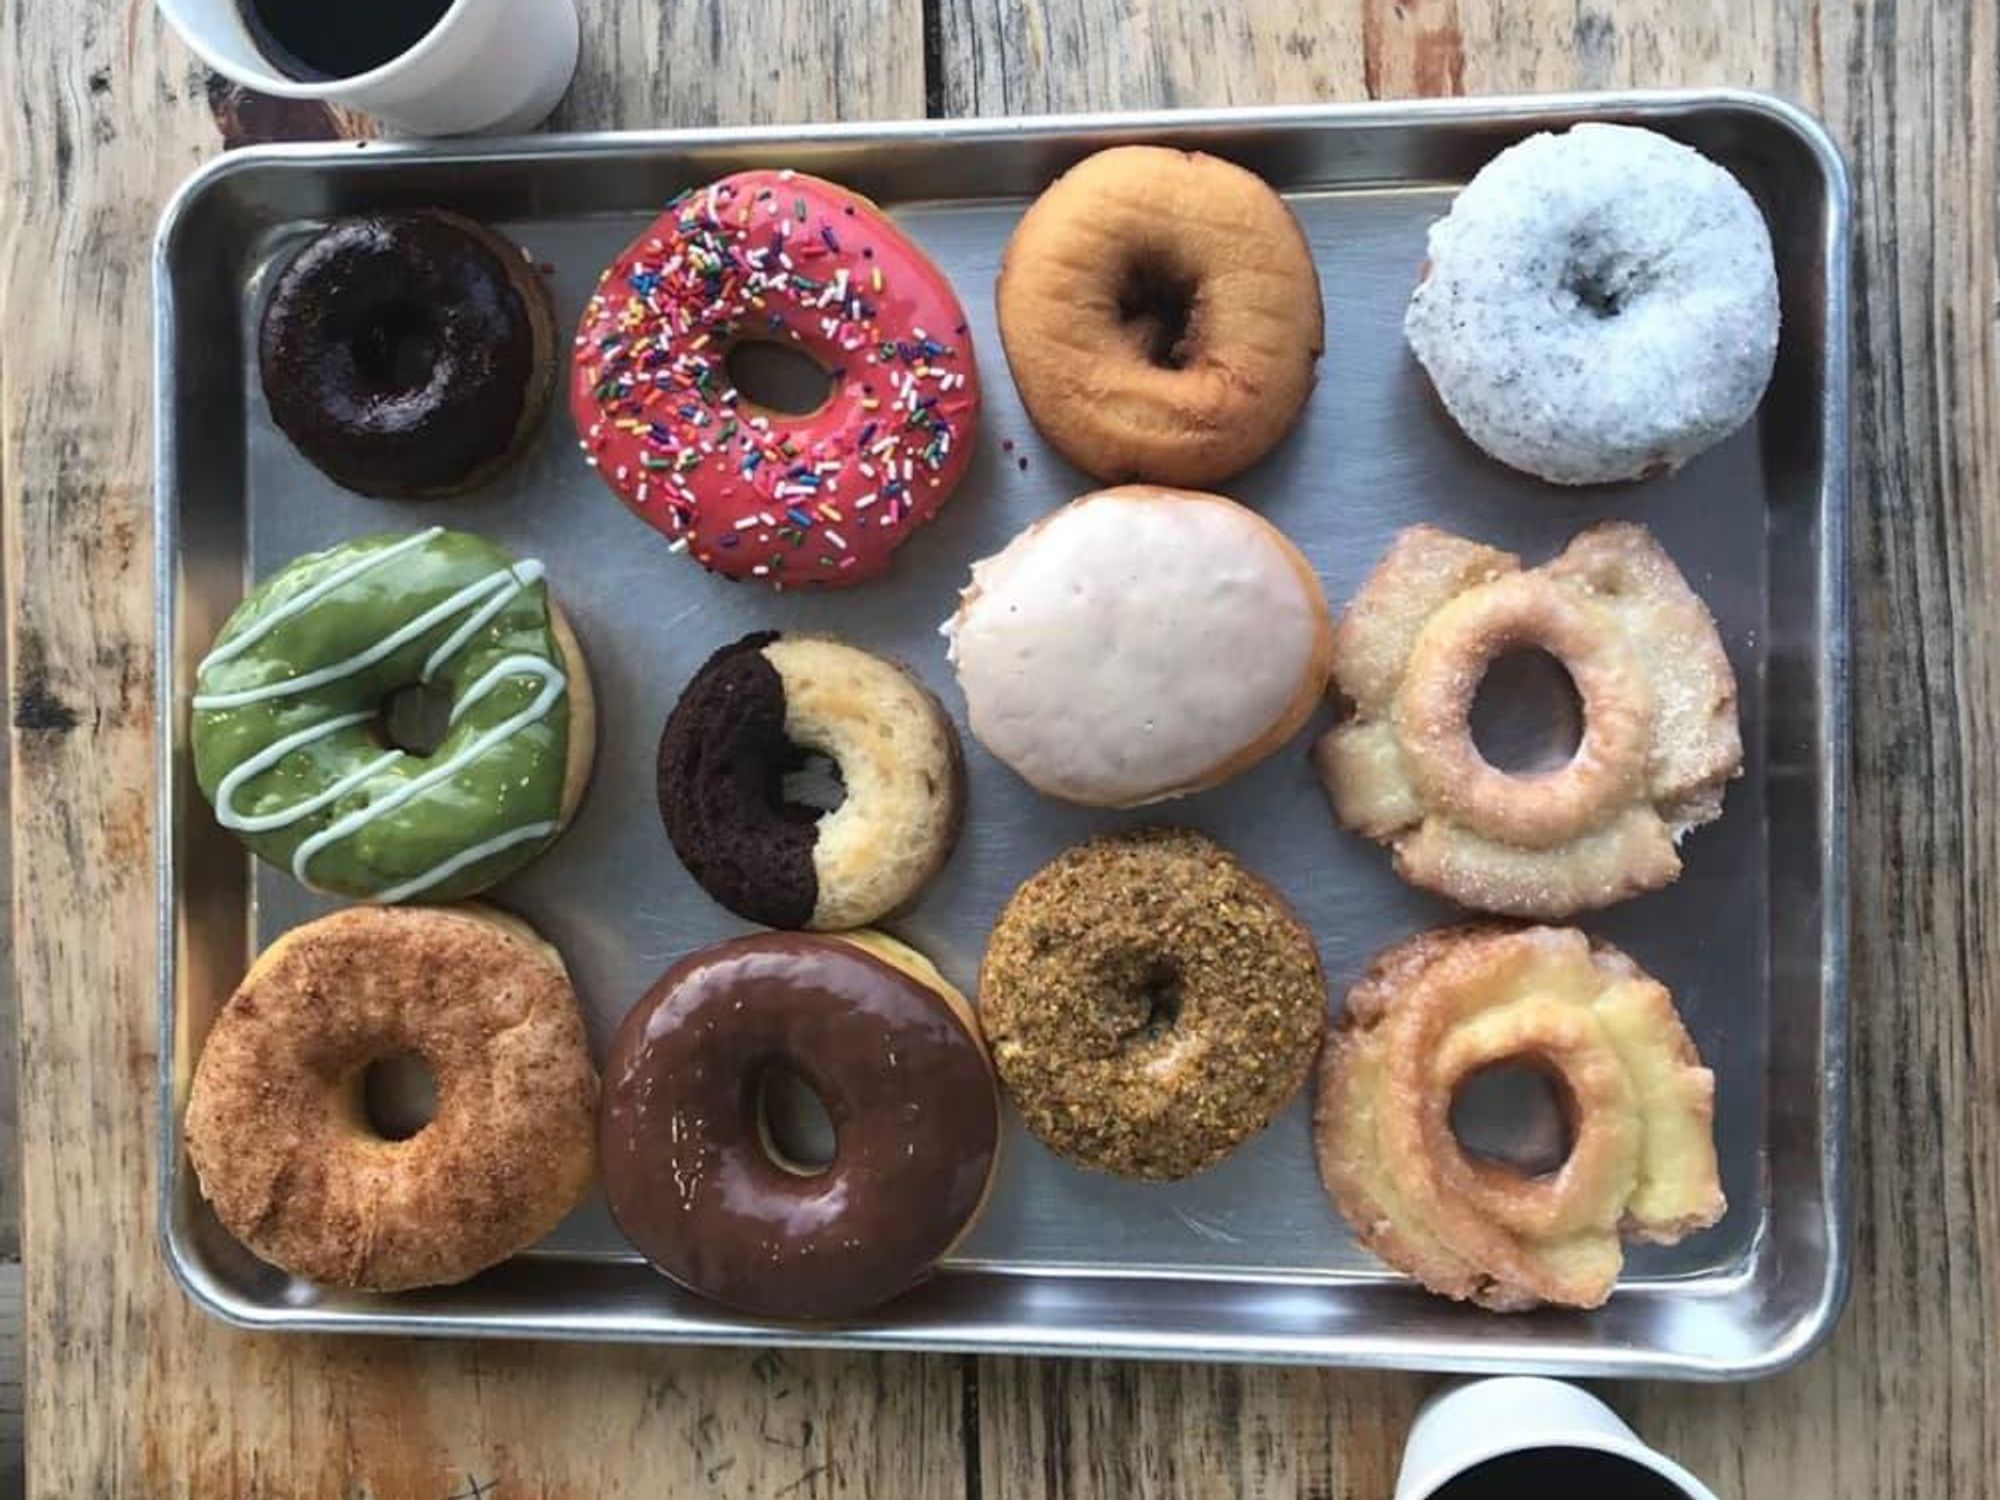 Morningstar coffee and doughnuts